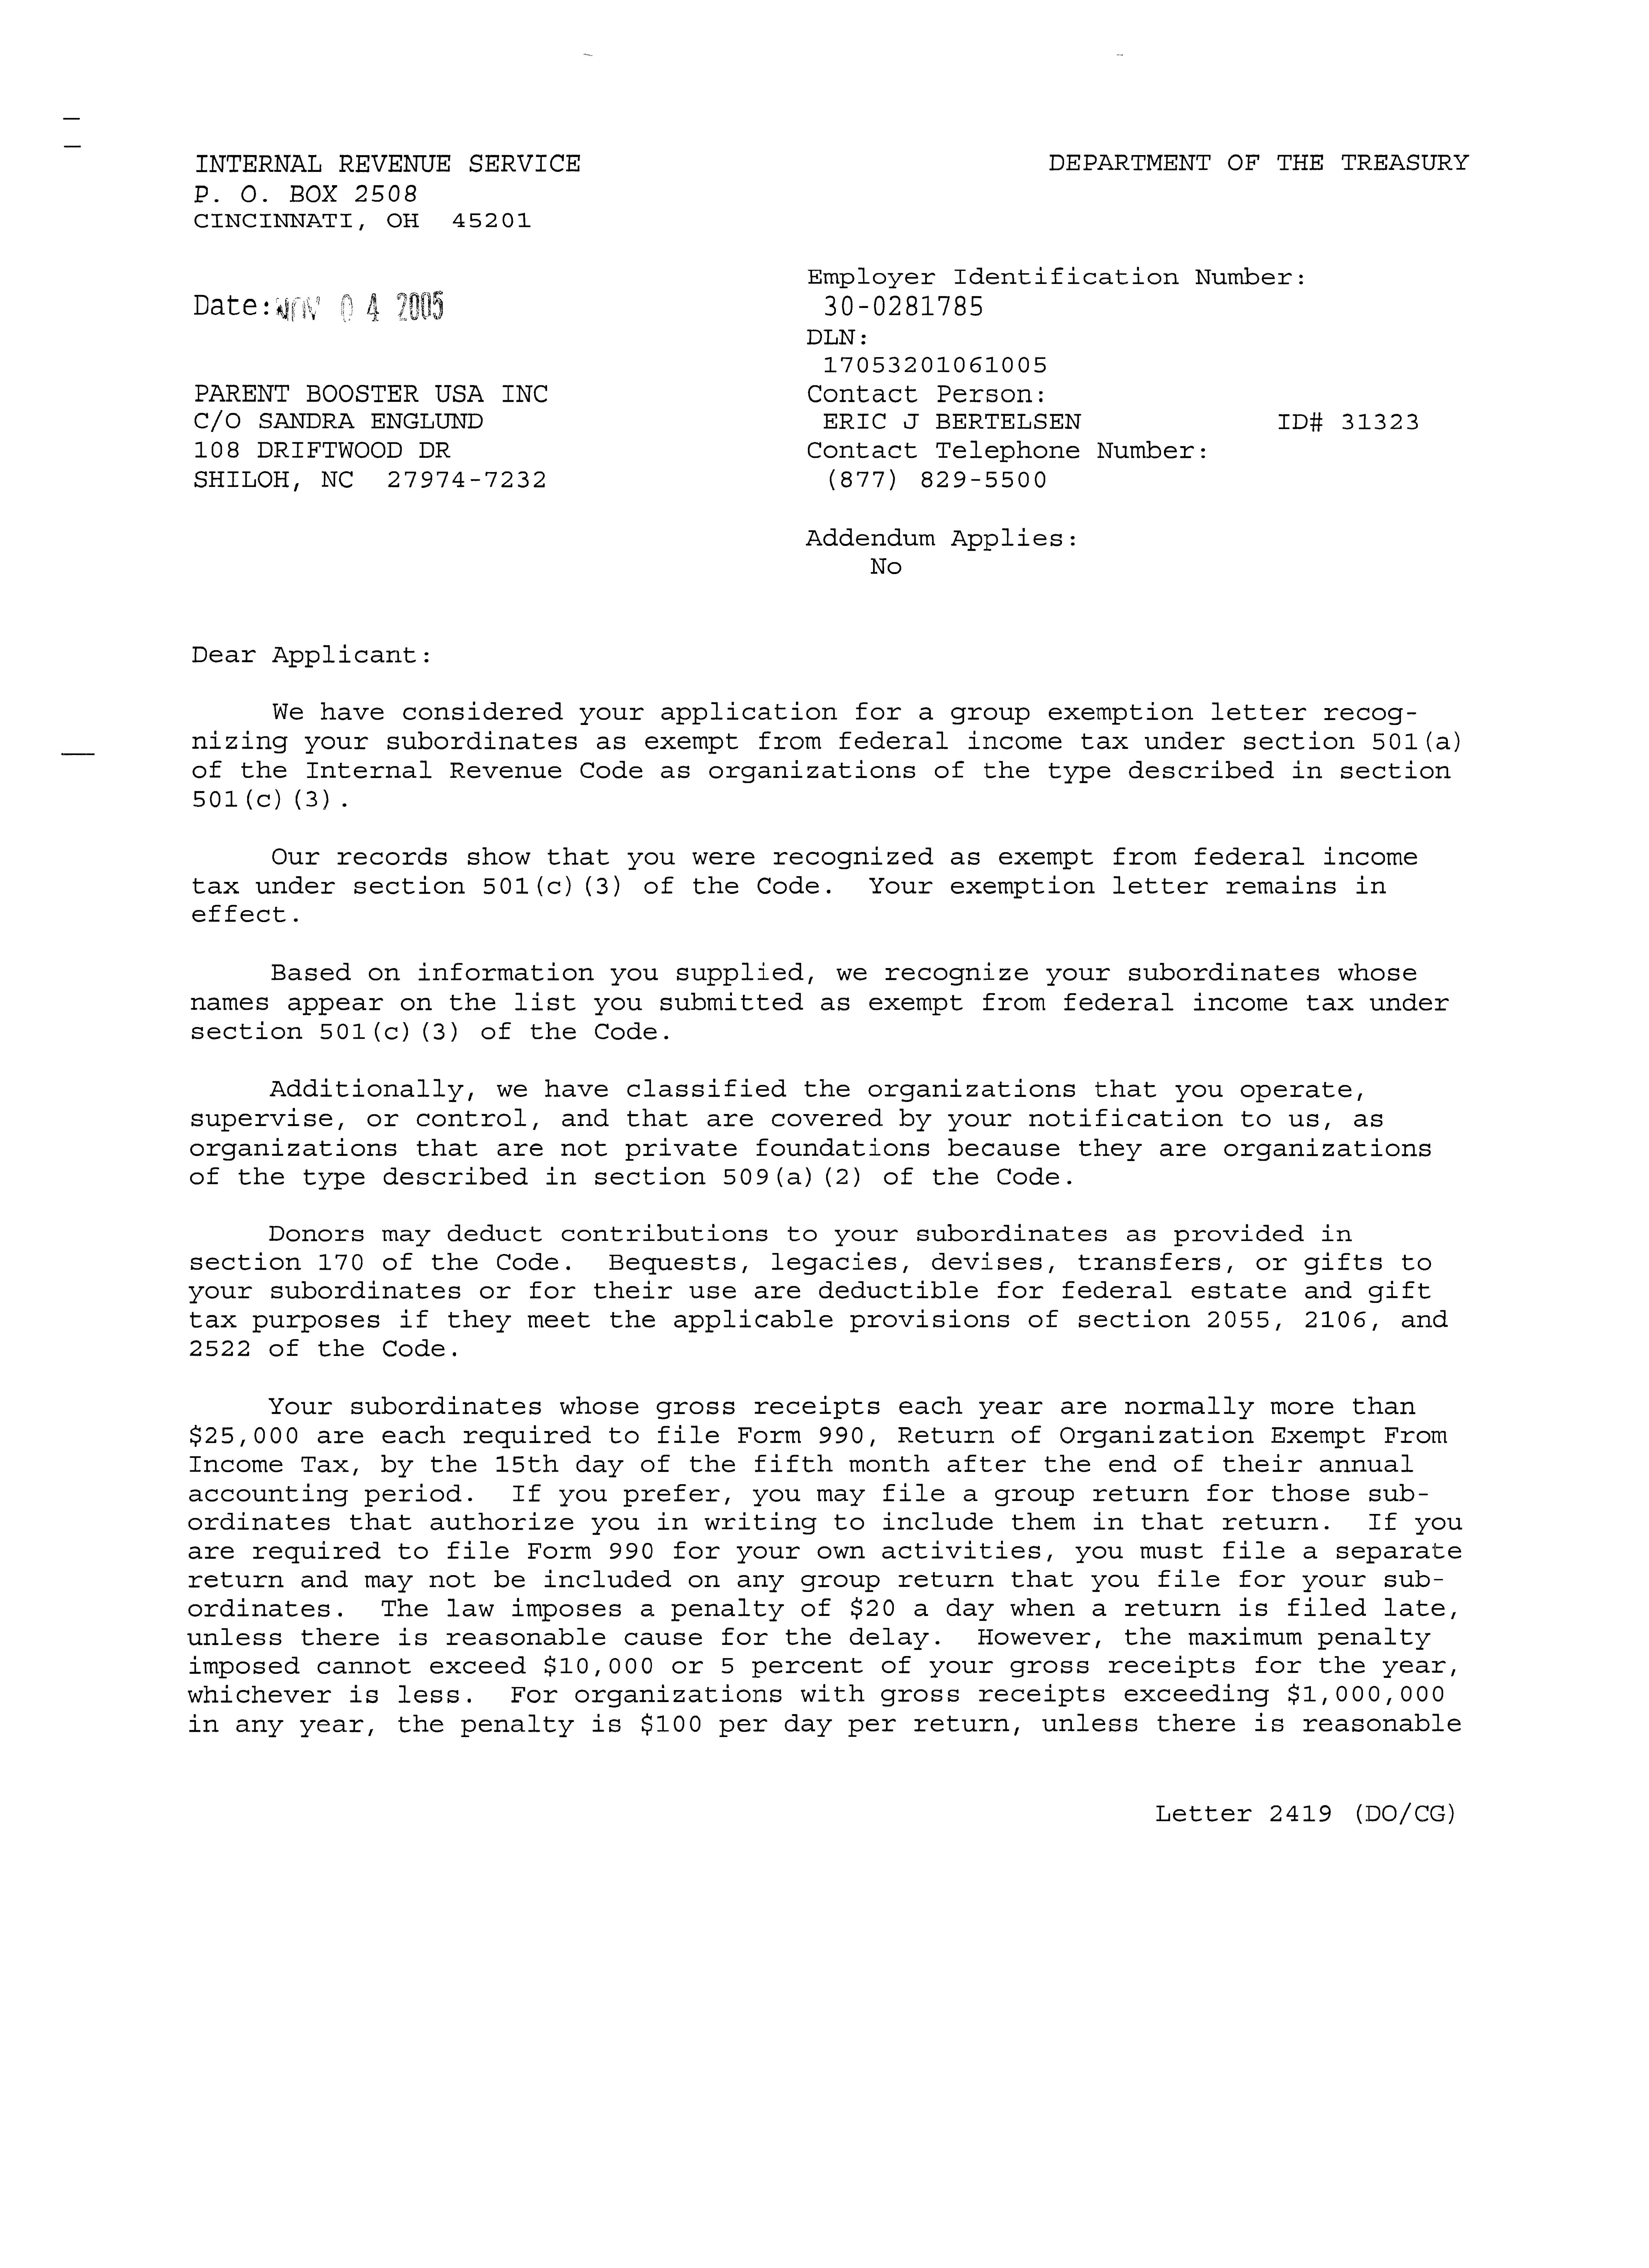 IRS exemption determination letter pg.1